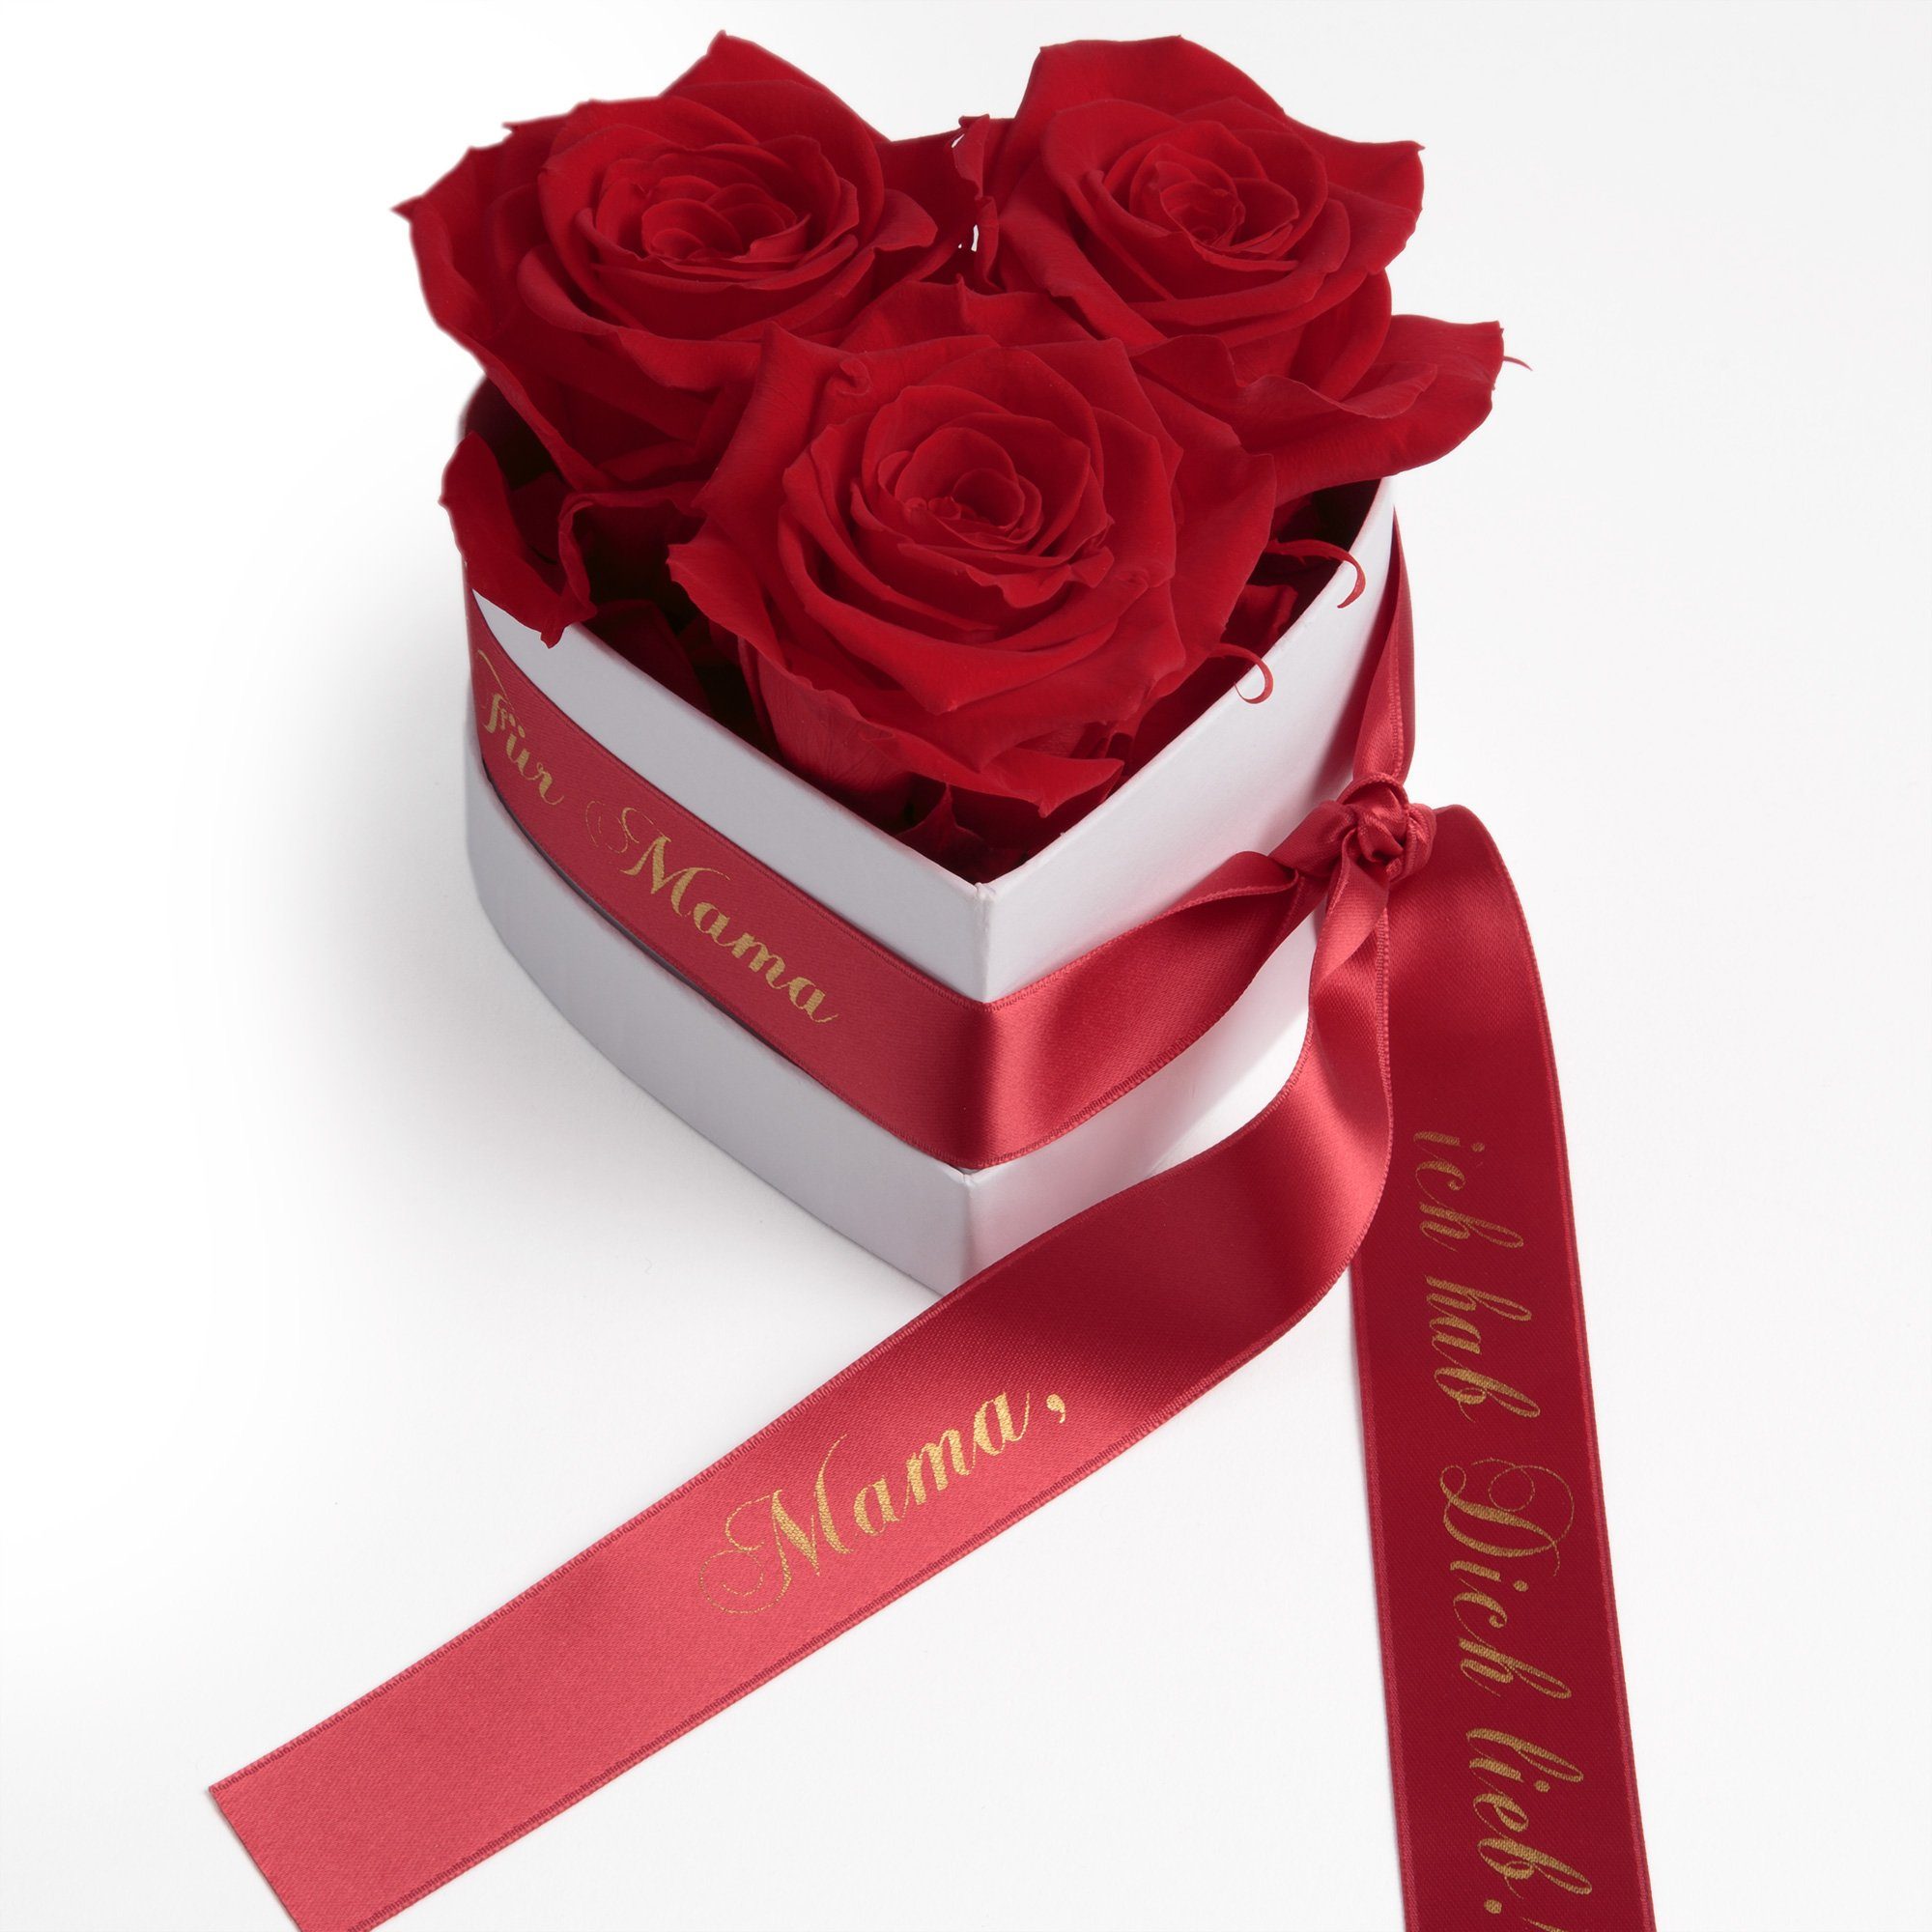 Goldene Hochzeit Geschenk Infinity Rose konserviert Rosenbox Blumenbox Herzform 